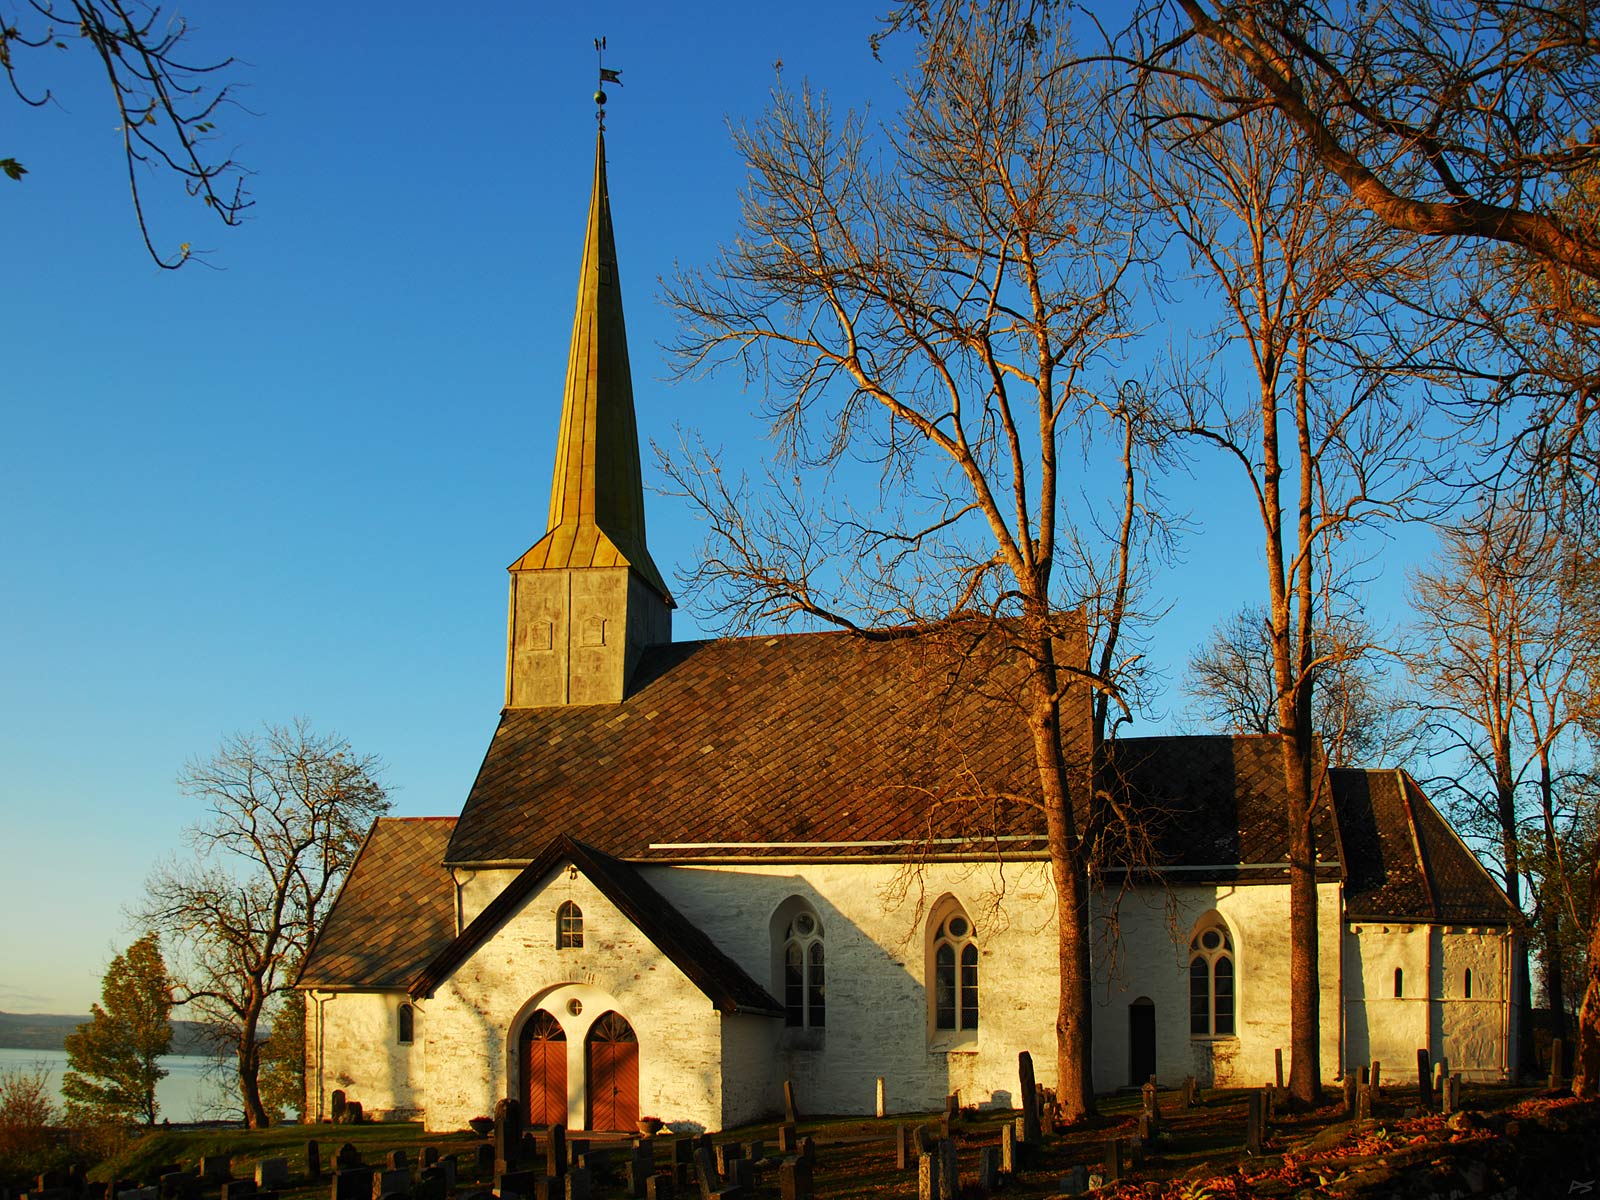 Alstadhaug church